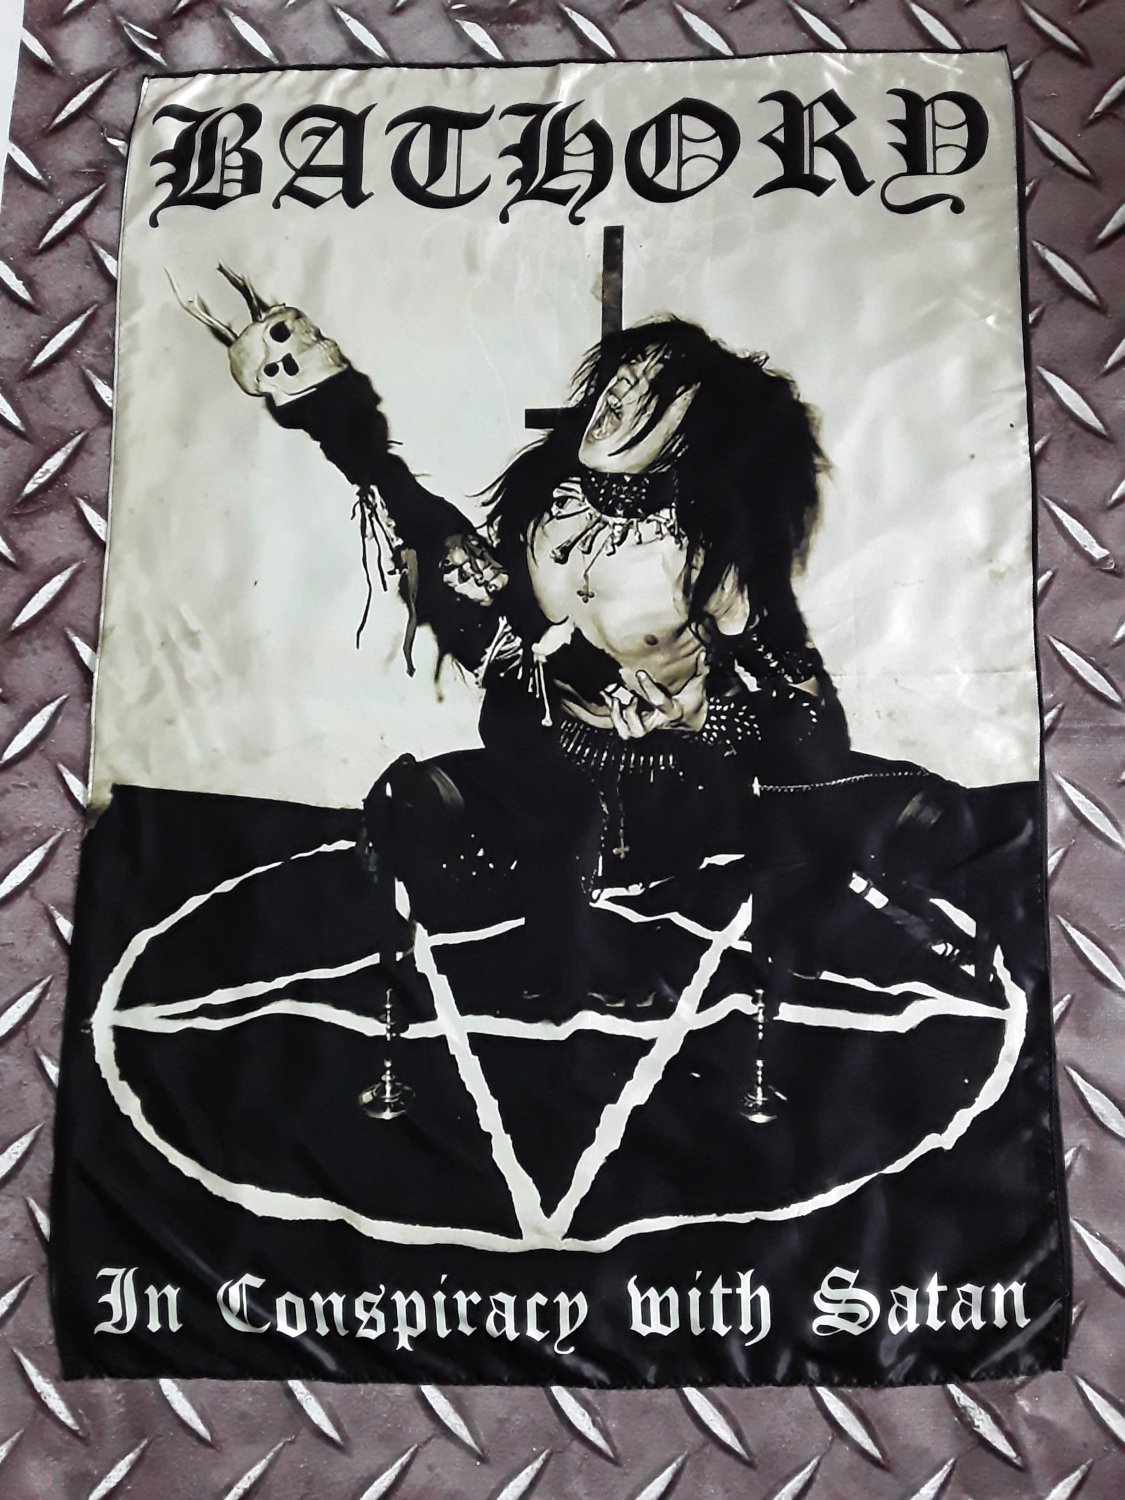 BATHORY - In conspiracy with Satan FLAG Black metal cloth poster Burzum Quorthon